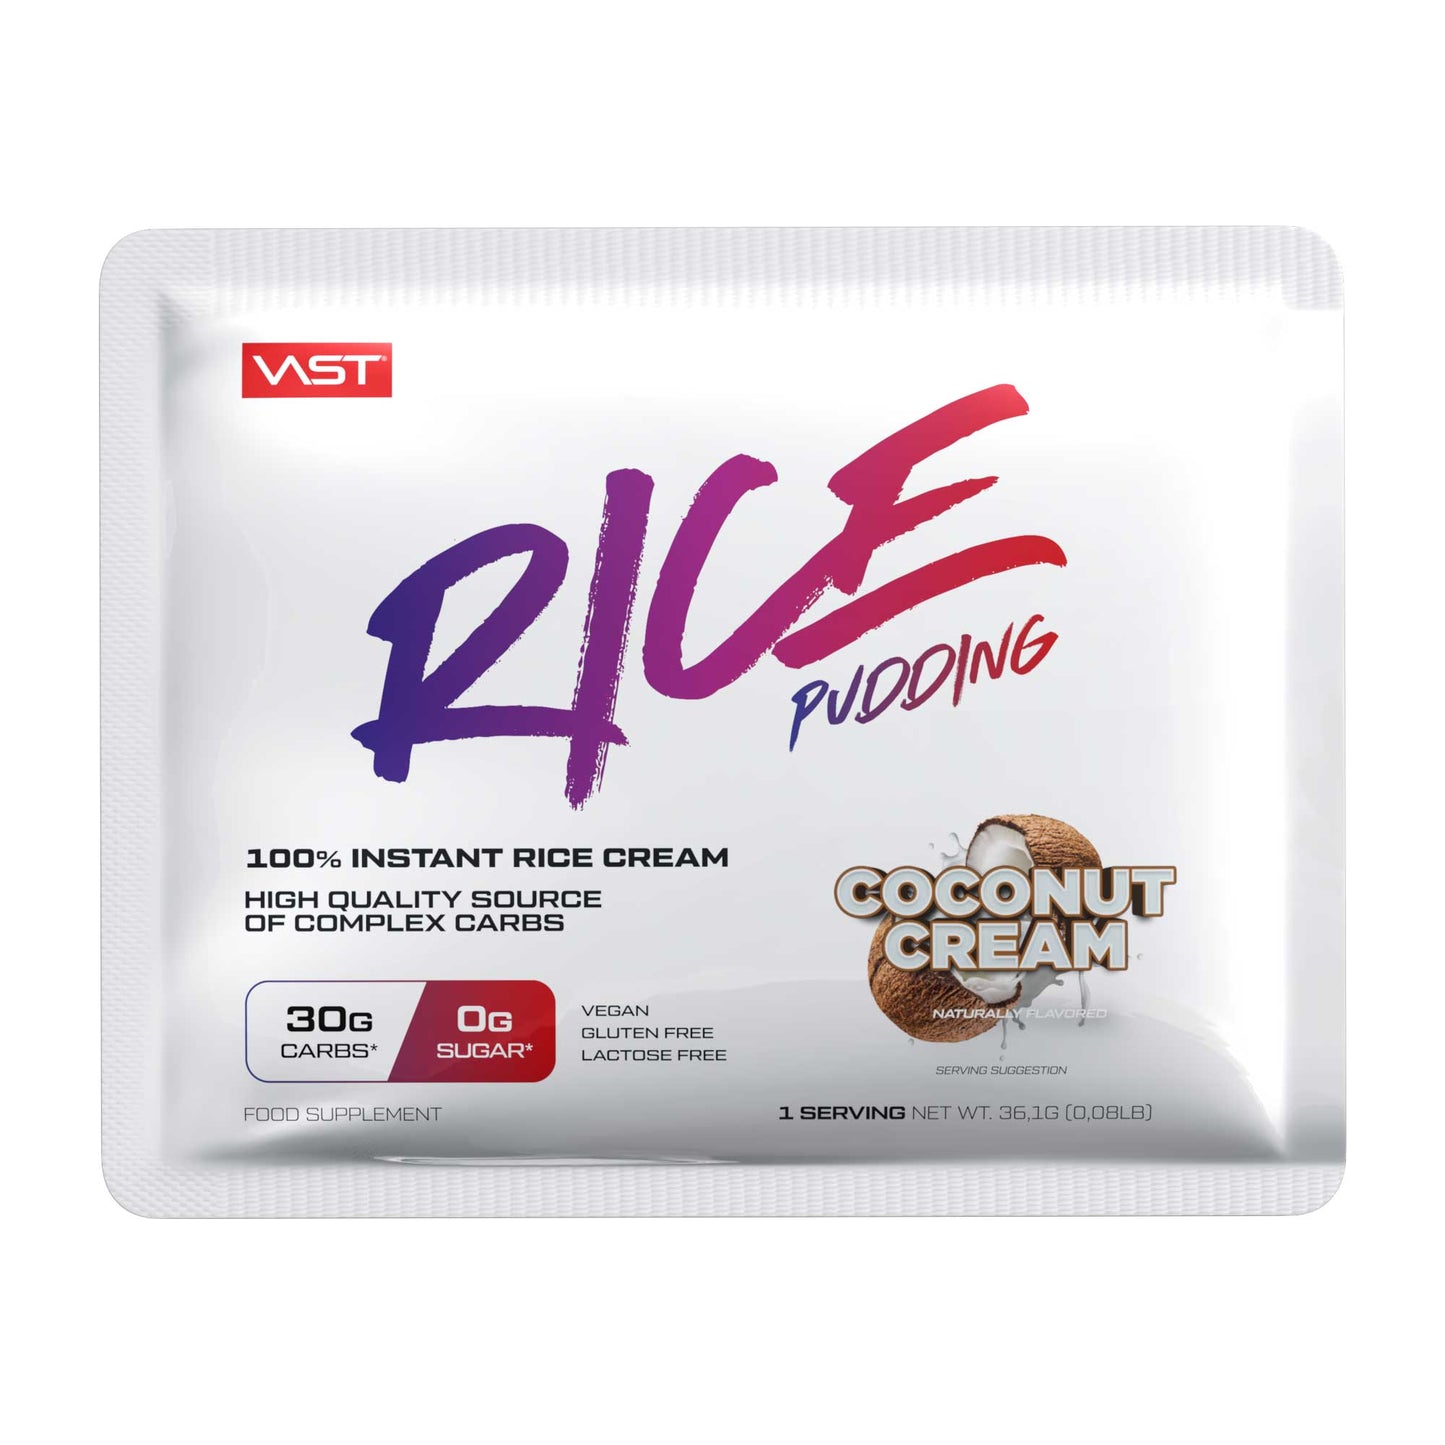 VAST Instant Rice Pudding - Sample (1 Portion)